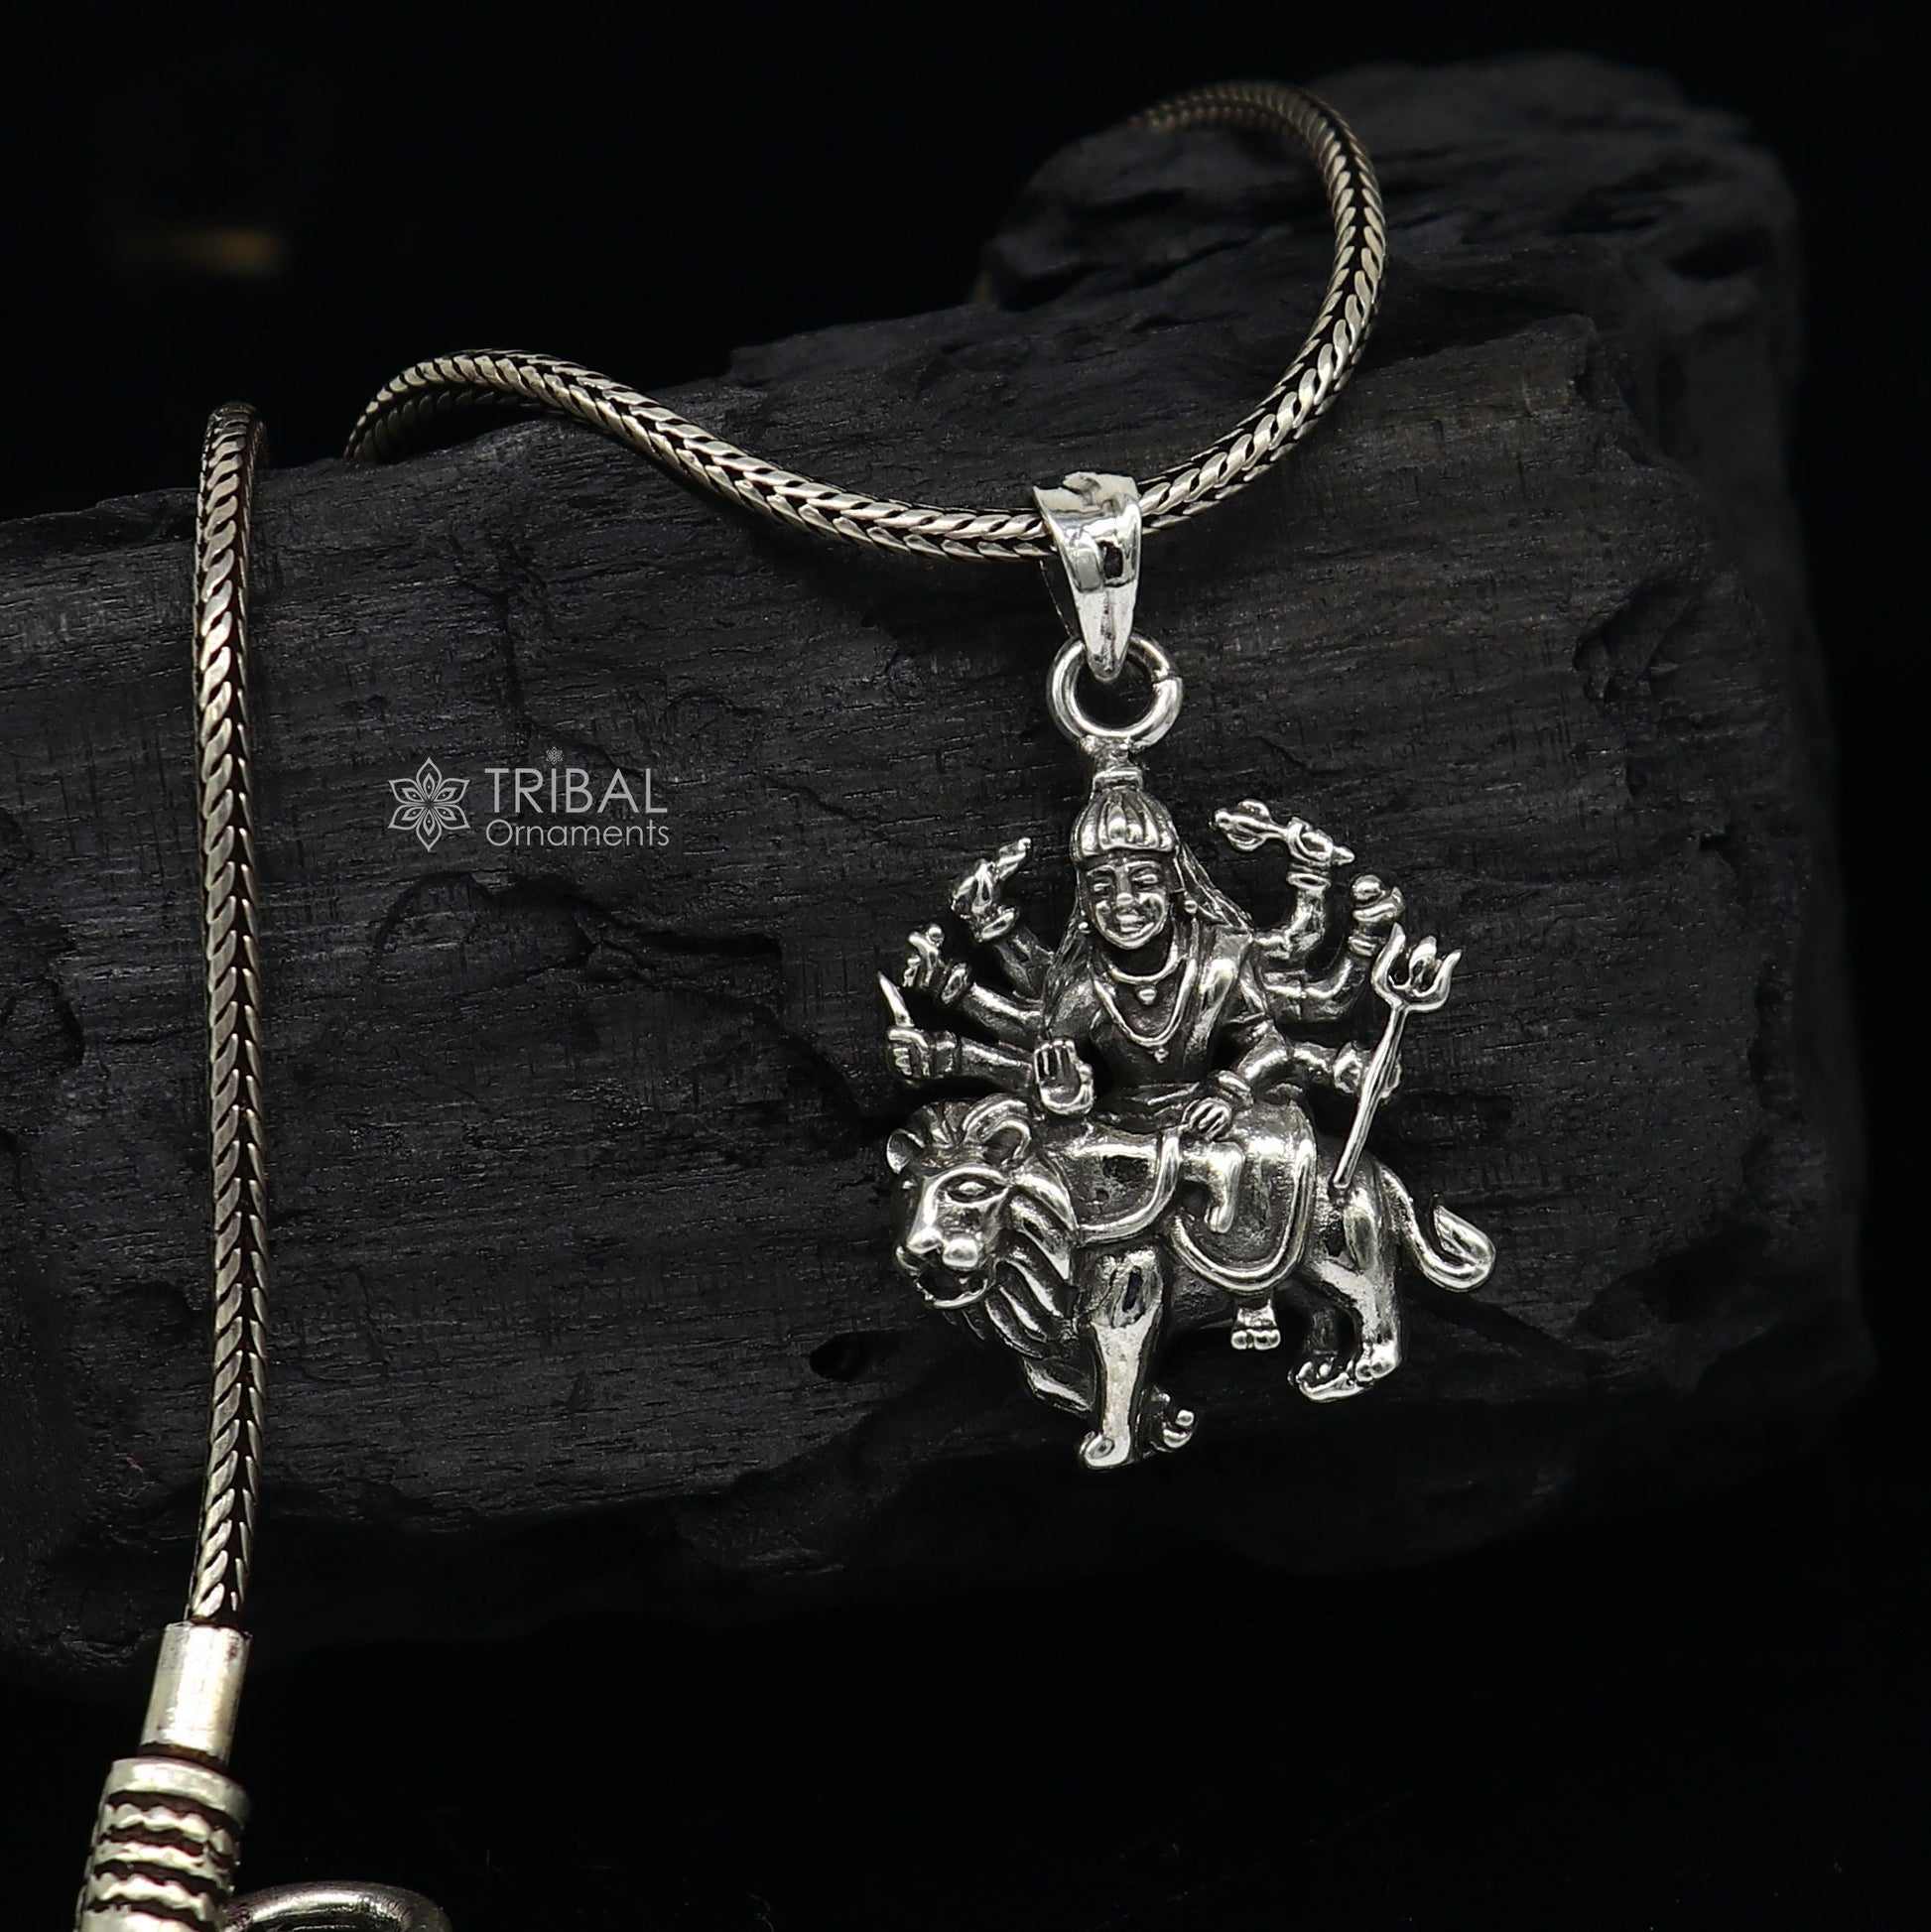 Divine 925 sterling silver Goddess bhawani/ Durga mataji with lion pendant, amazing unisex pendant locket goddess tribal jewelry nsp743 - TRIBAL ORNAMENTS